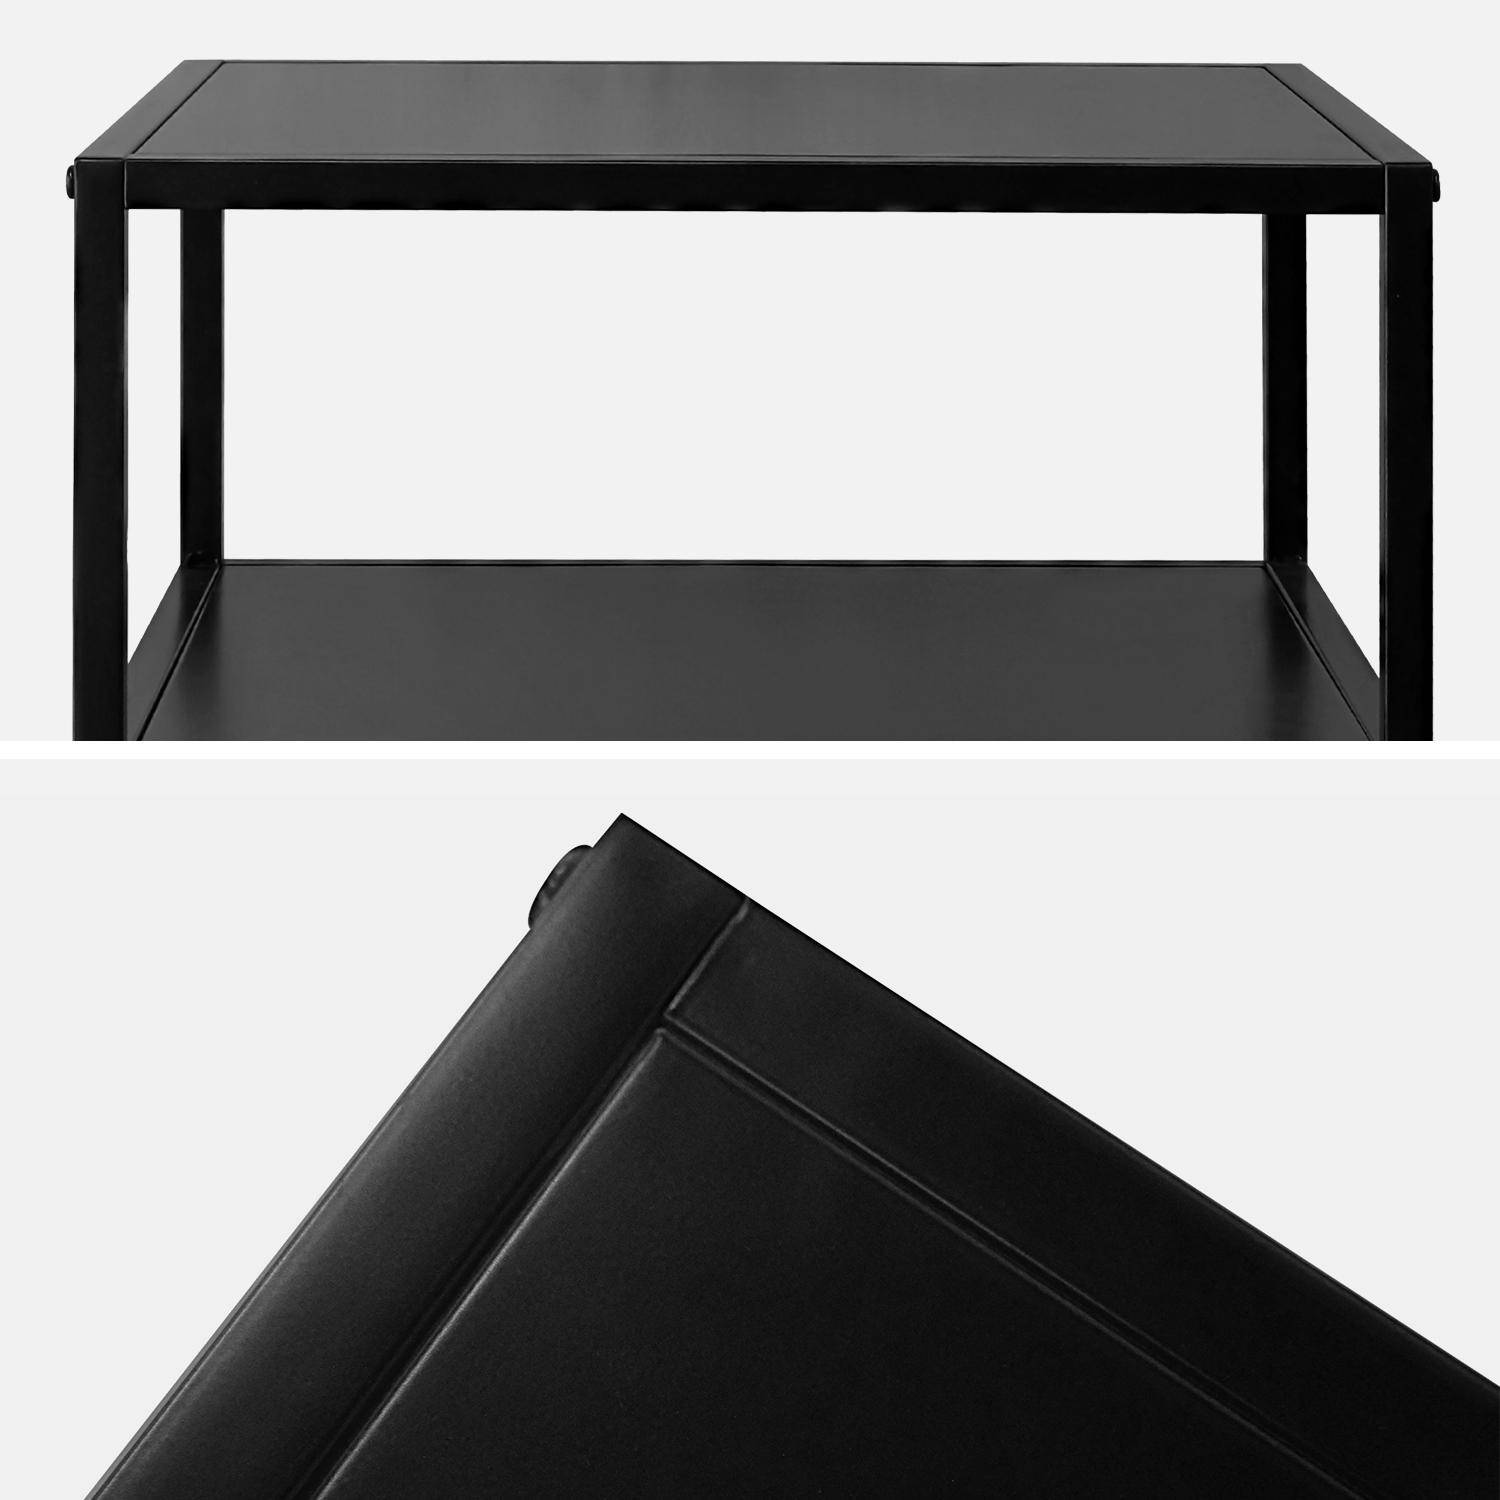 Set of 2 black metal bedside tables, 1 shelf, INDUSTRIAL L43xW40xH52cm Photo7